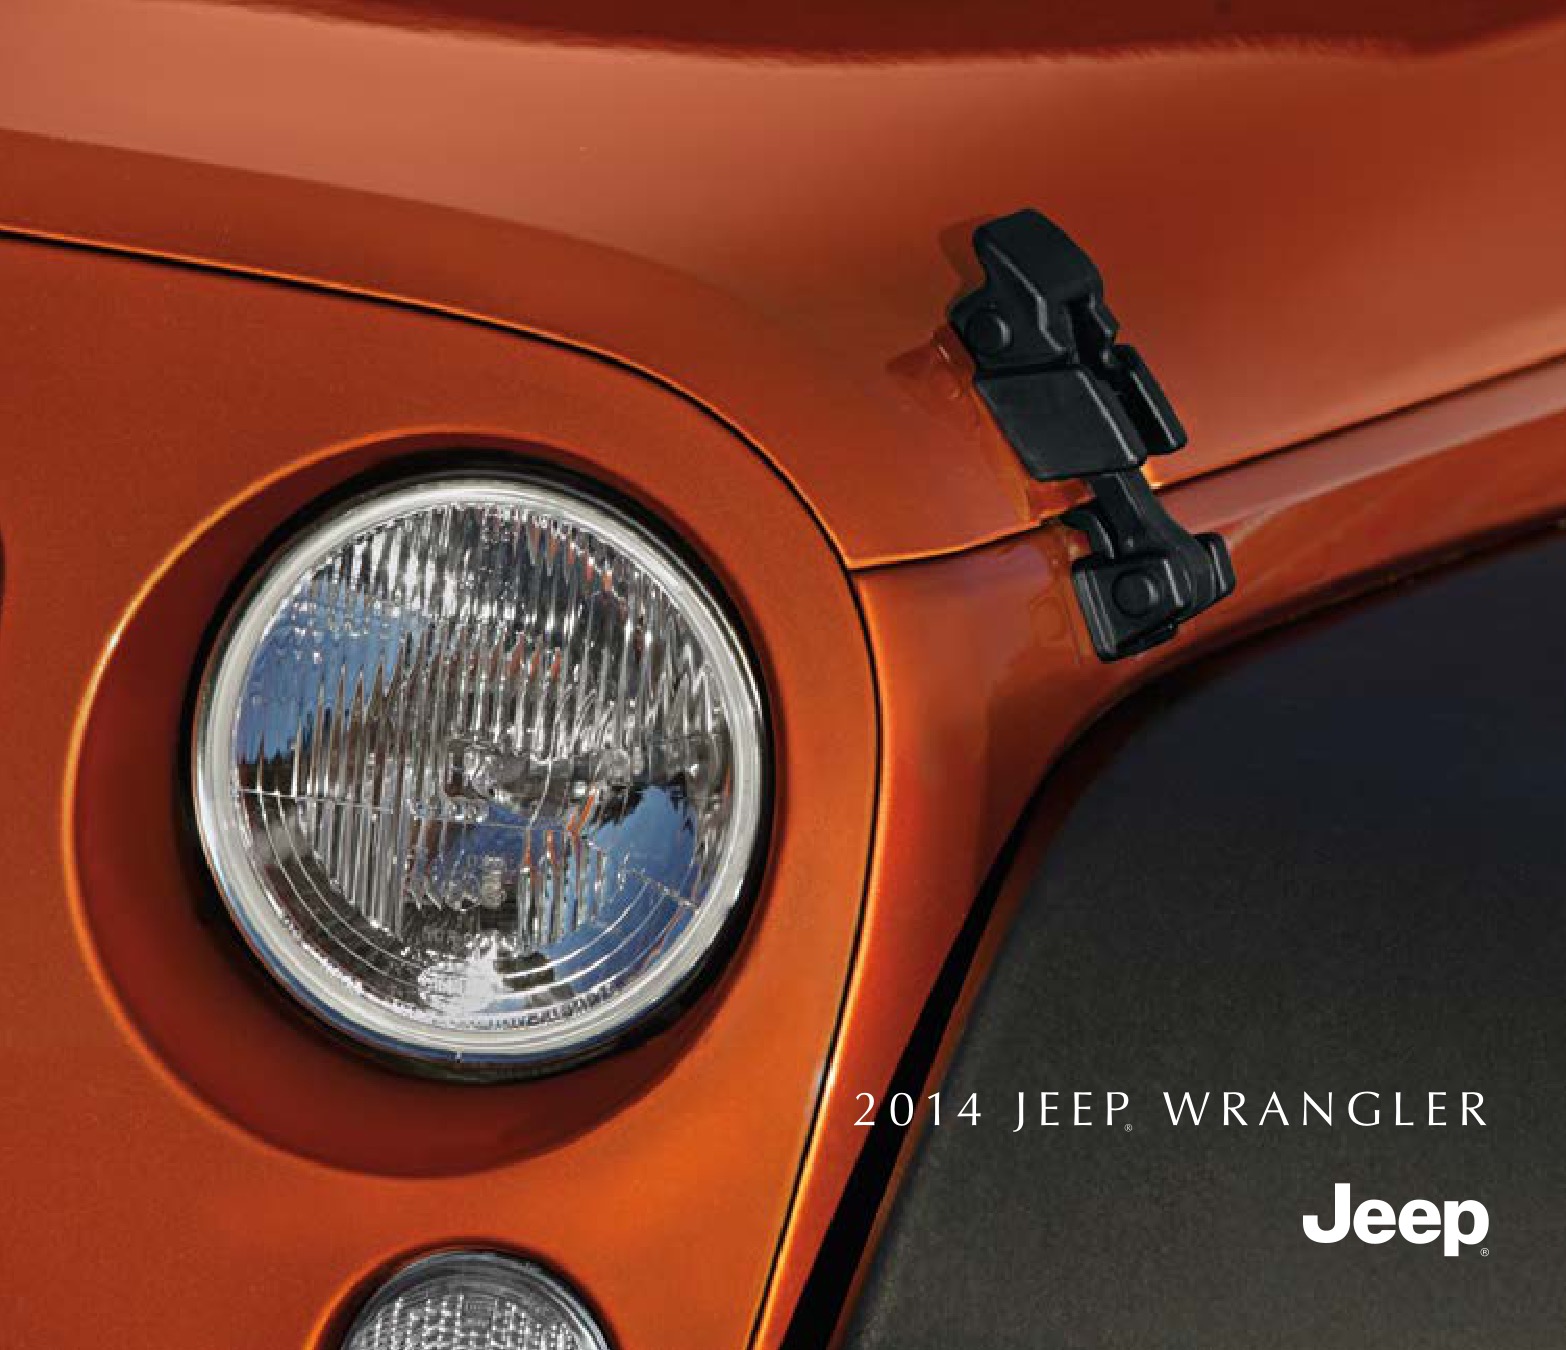 2014 Jeep Wrangler Brochure